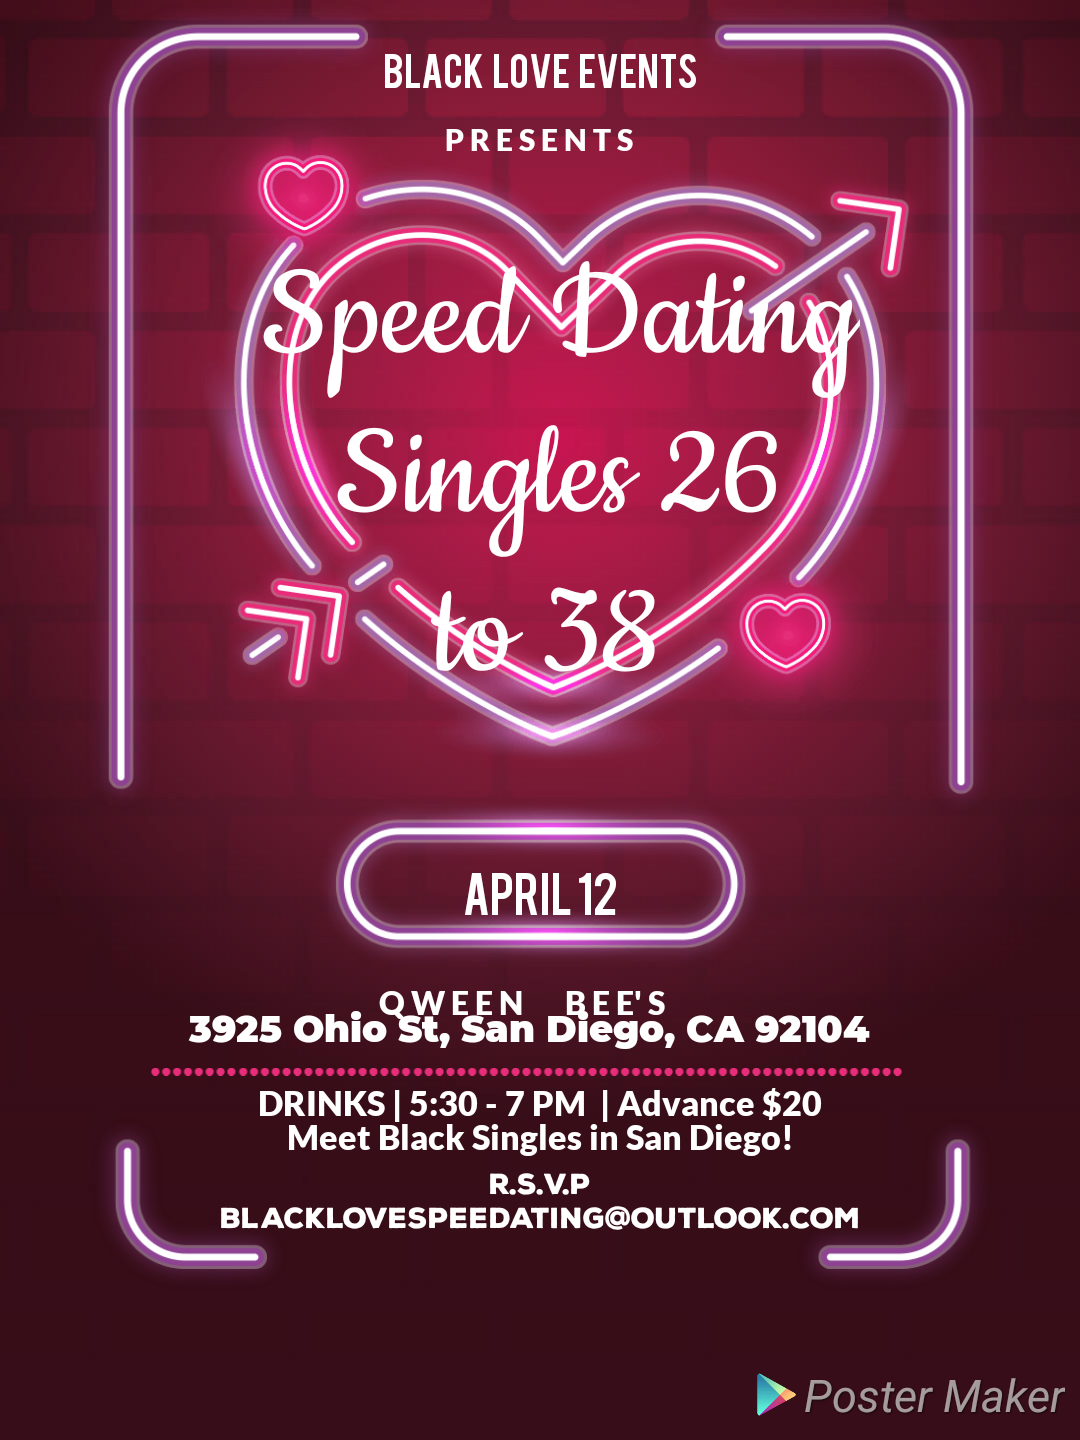 Black Love Speed Dating